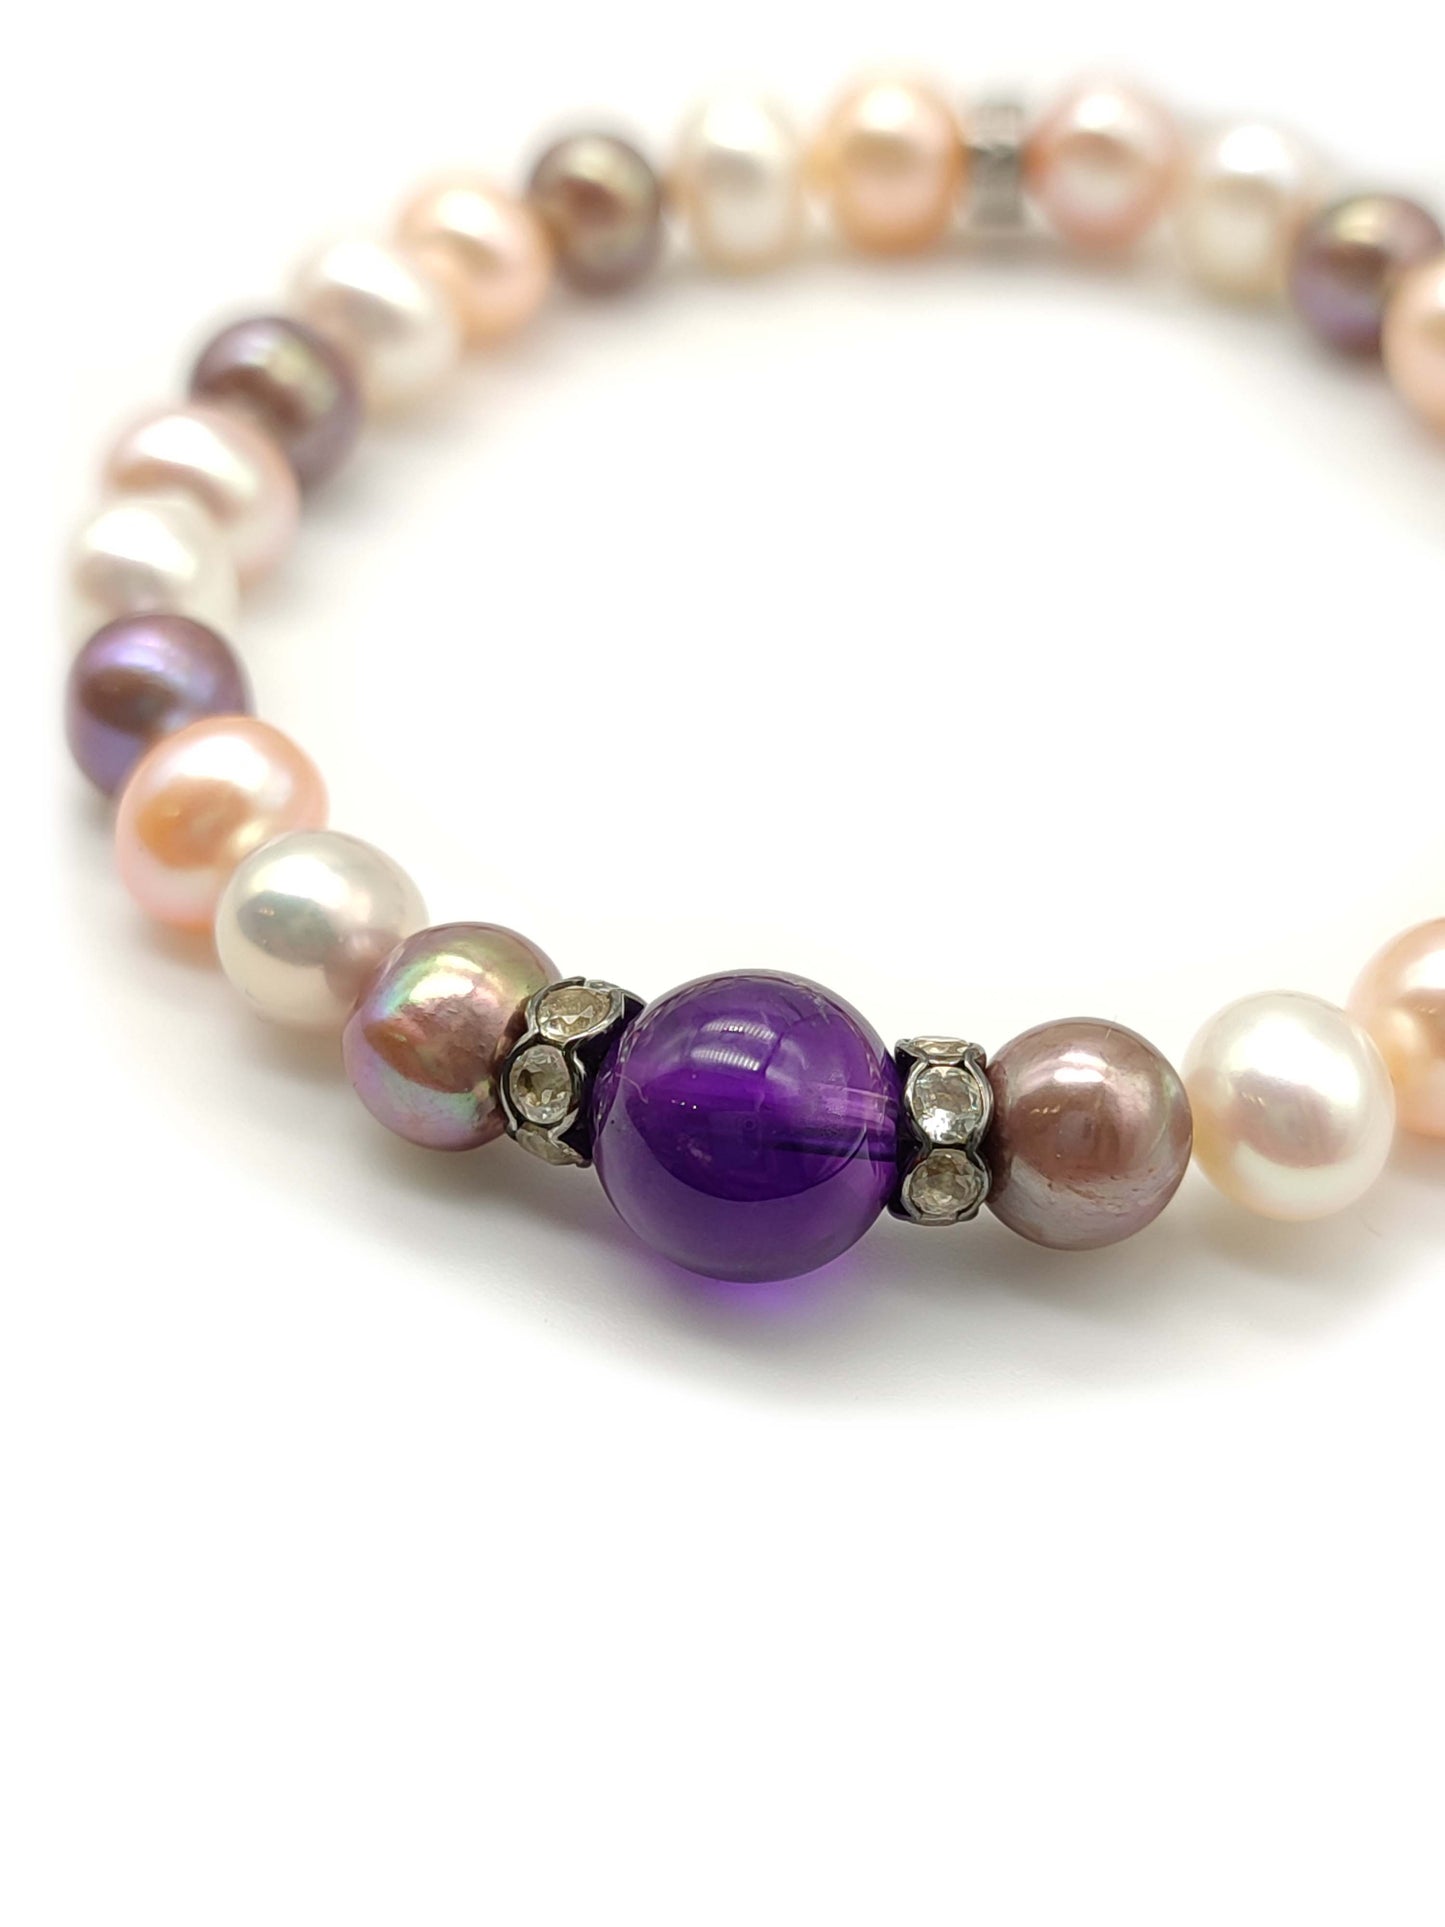 Elastic sea pearl and amethyst bracelet